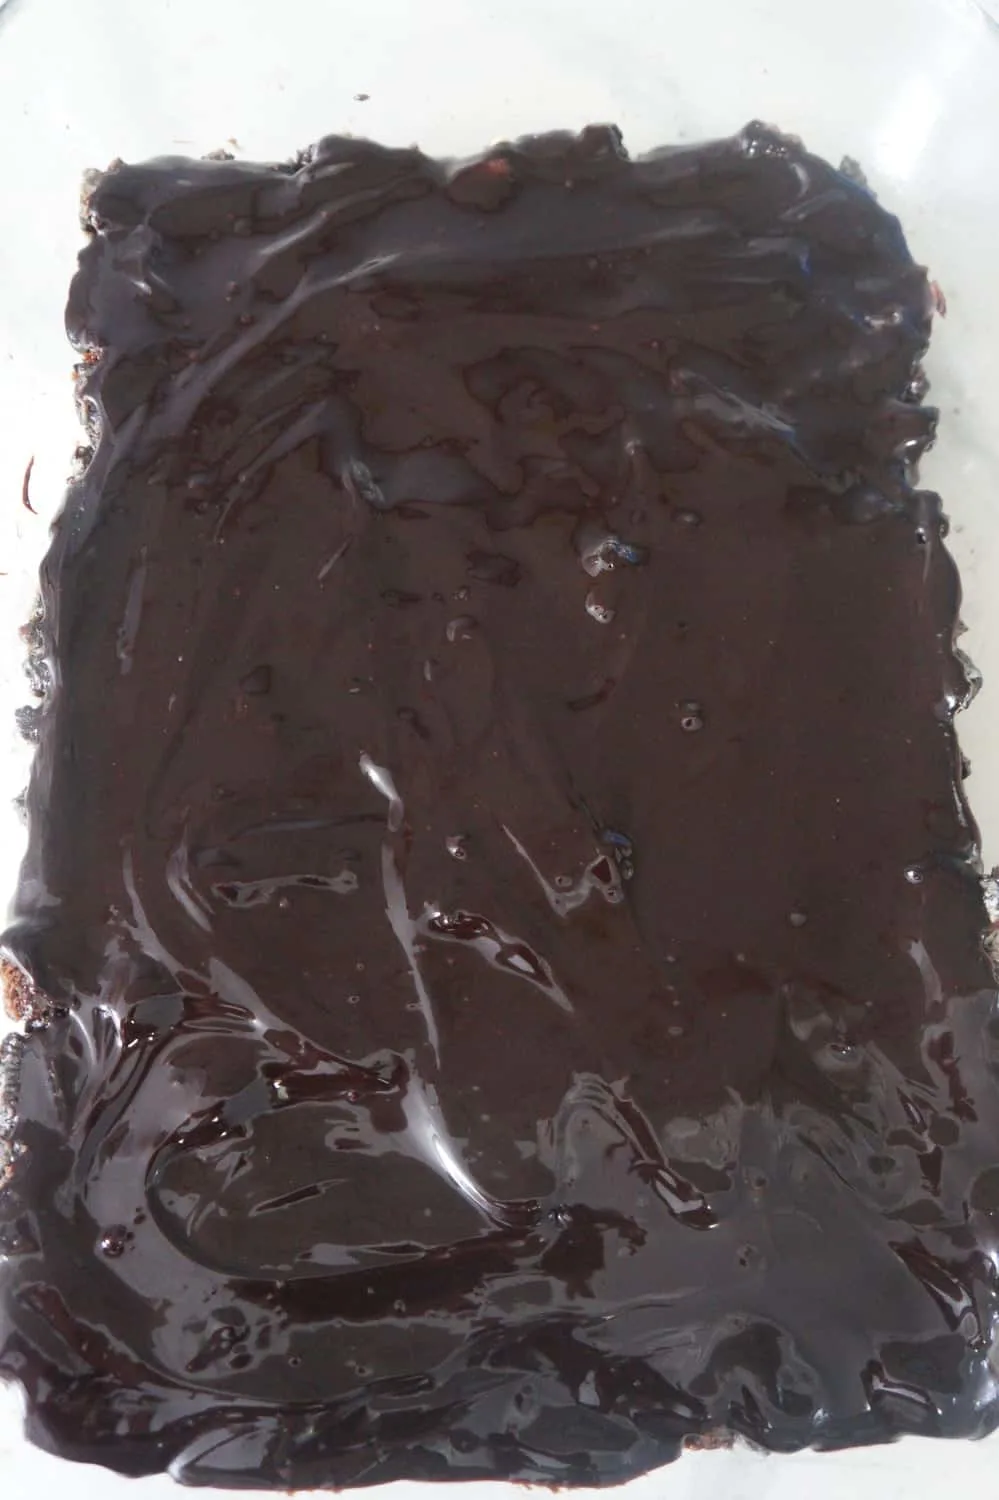 chocolate fudge topping spread over Oreo base